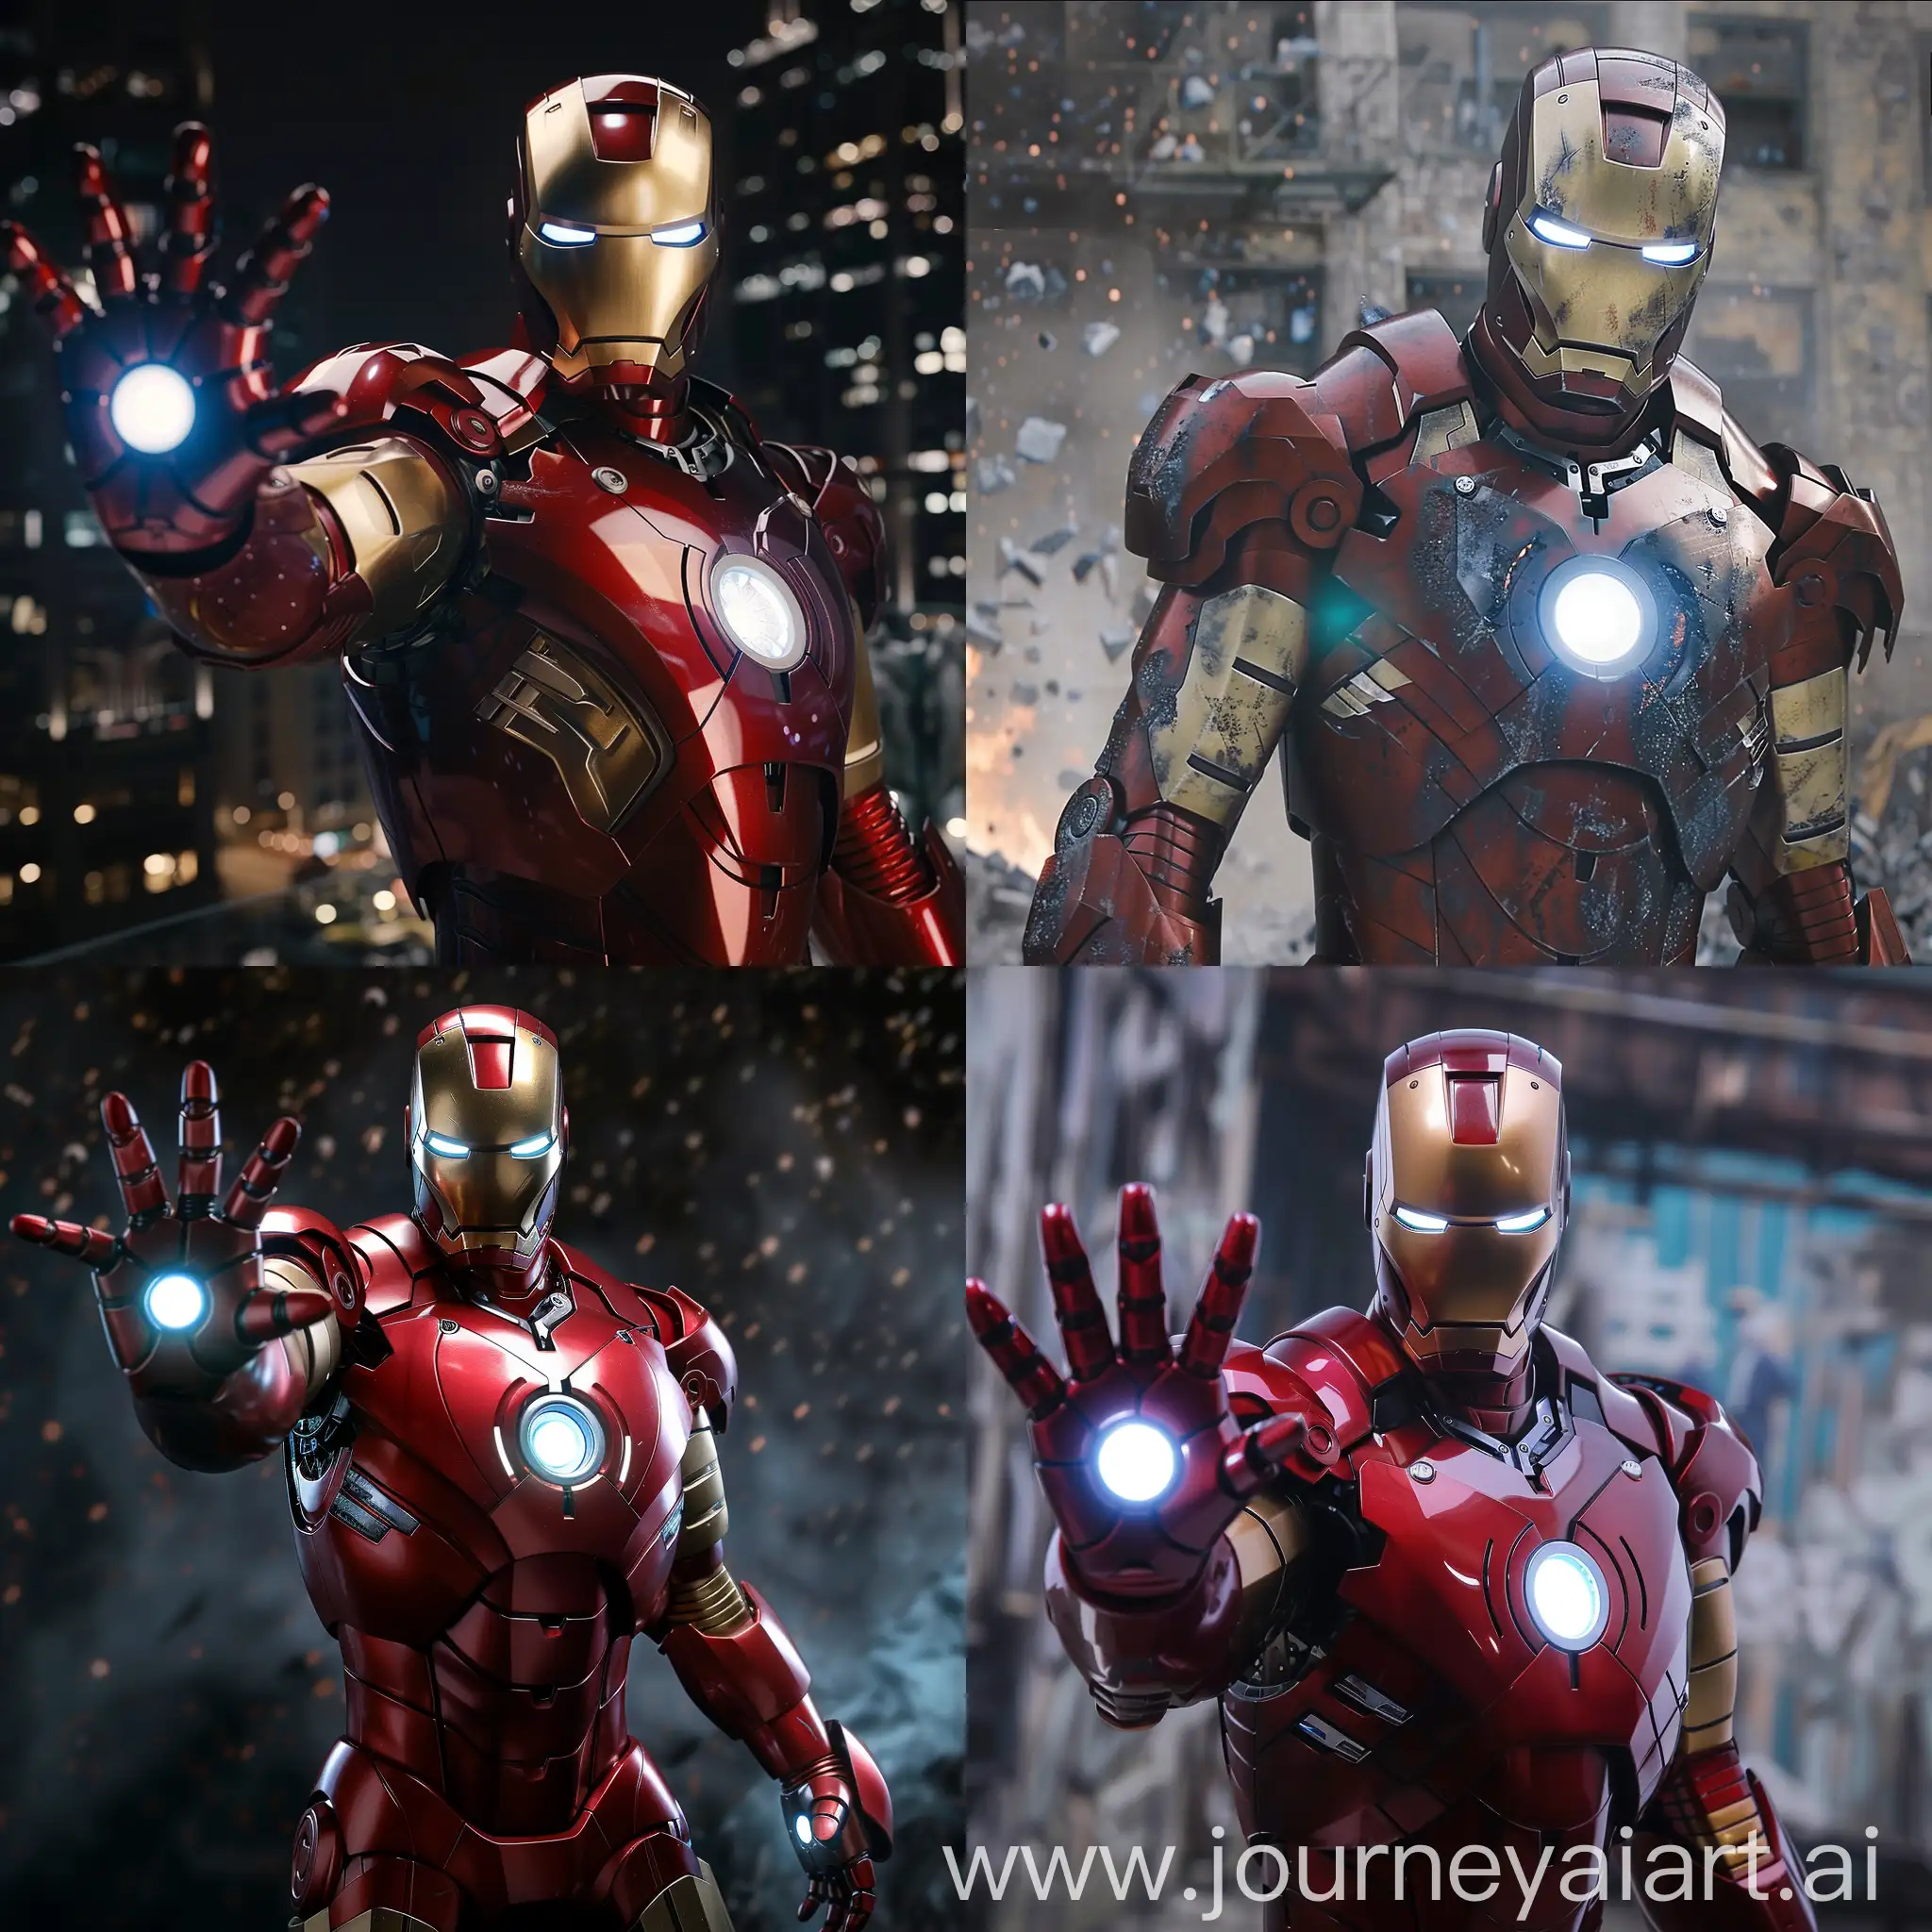 Iron-Man-Suit-Prototype-Version-6-in-Futuristic-Laboratory-Setting